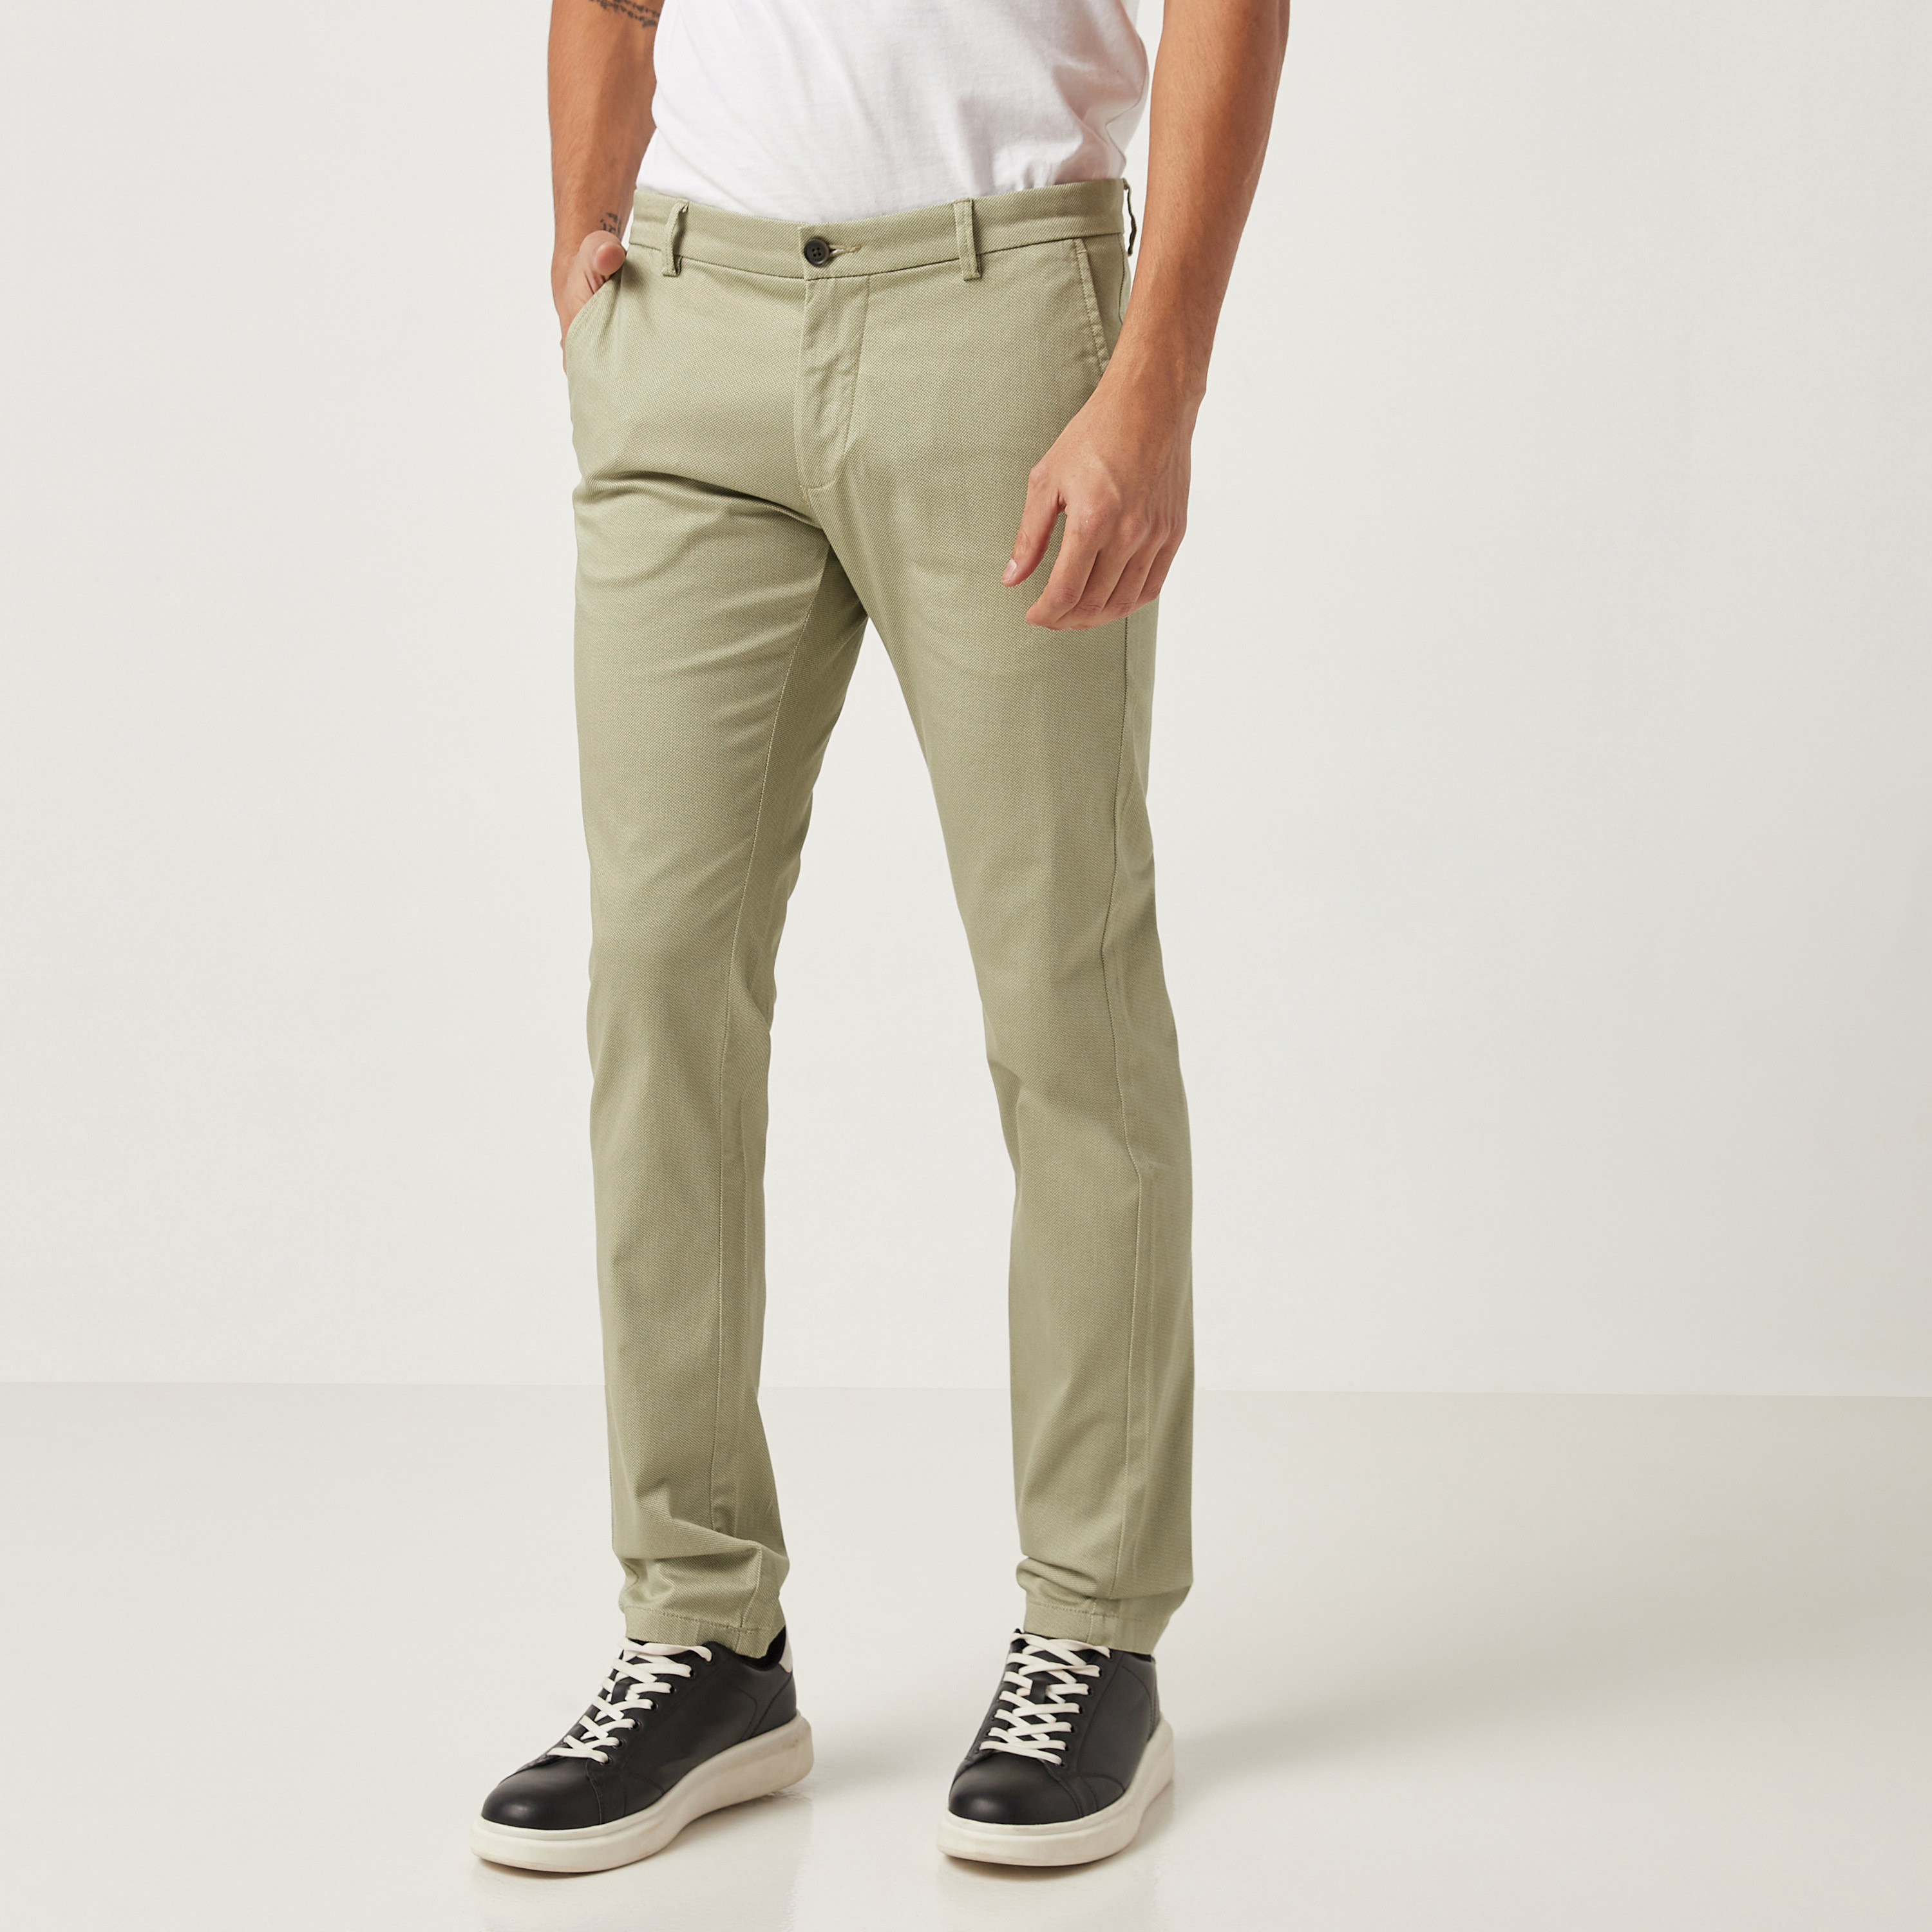 Buy ARROW SPORT Khaki Solid Cotton Blend Regular Fit Mens Trousers |  Shoppers Stop